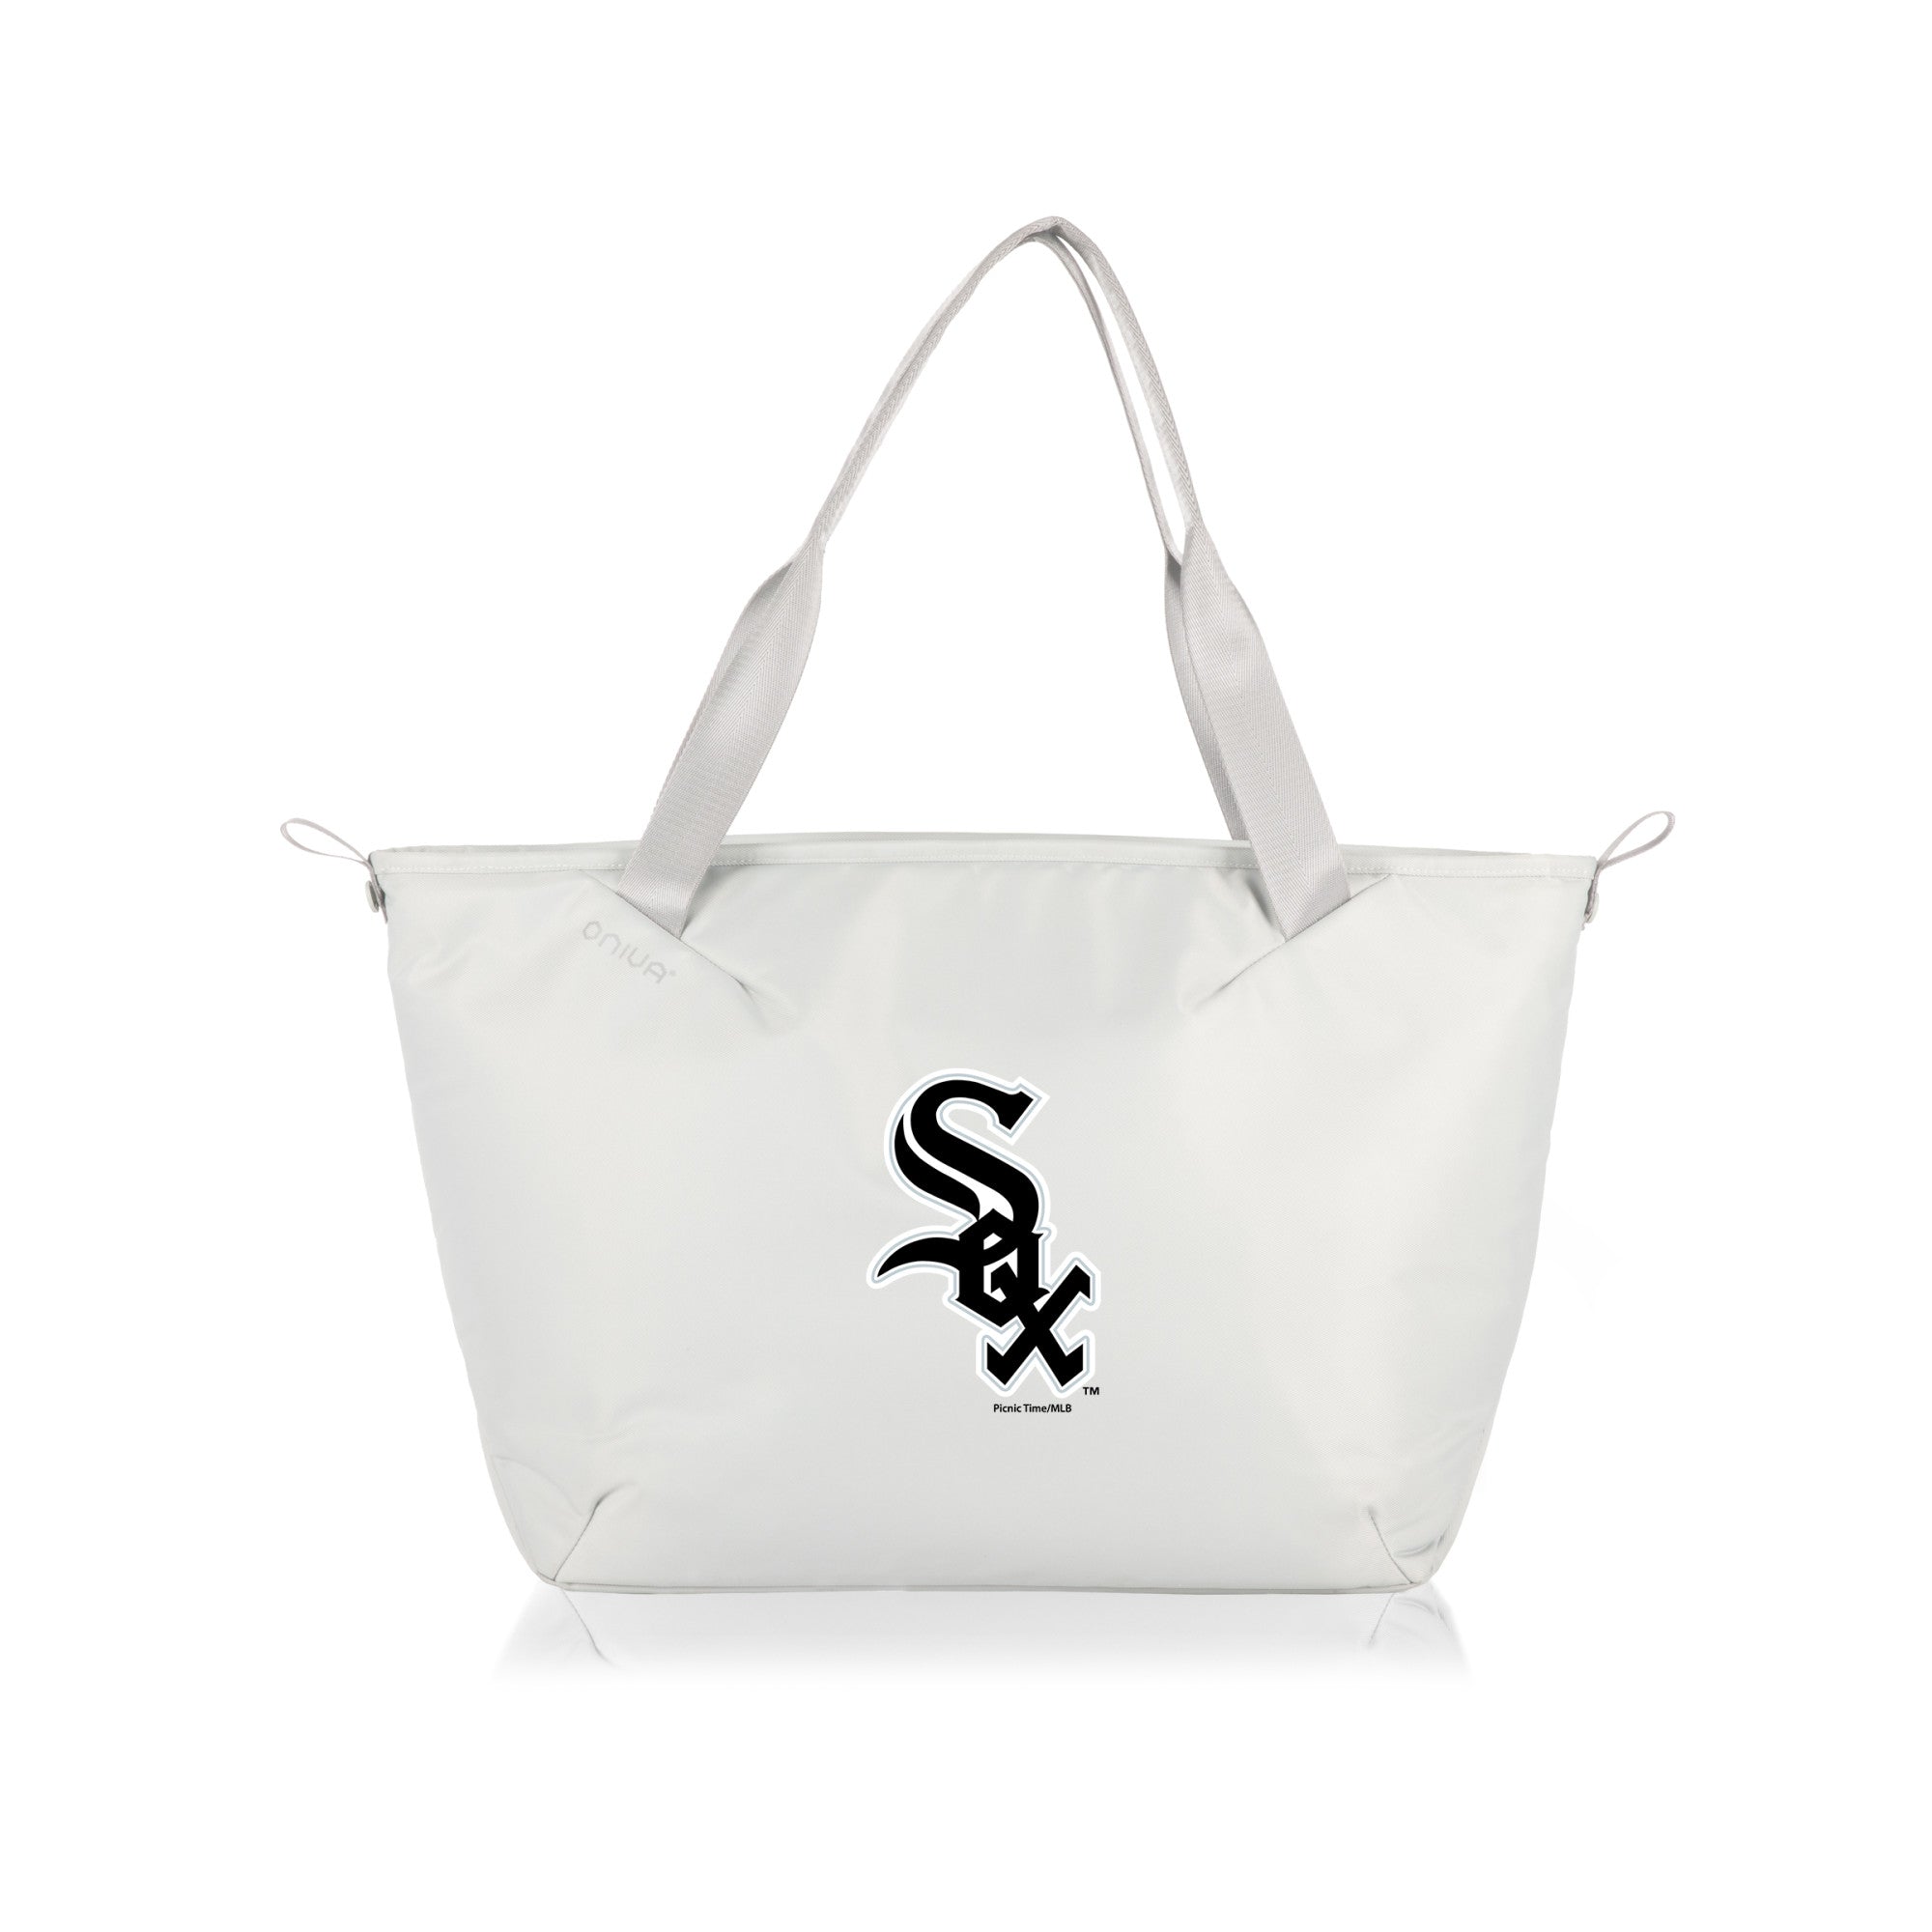 Chicago White Sox - Tarana Cooler Tote Bag